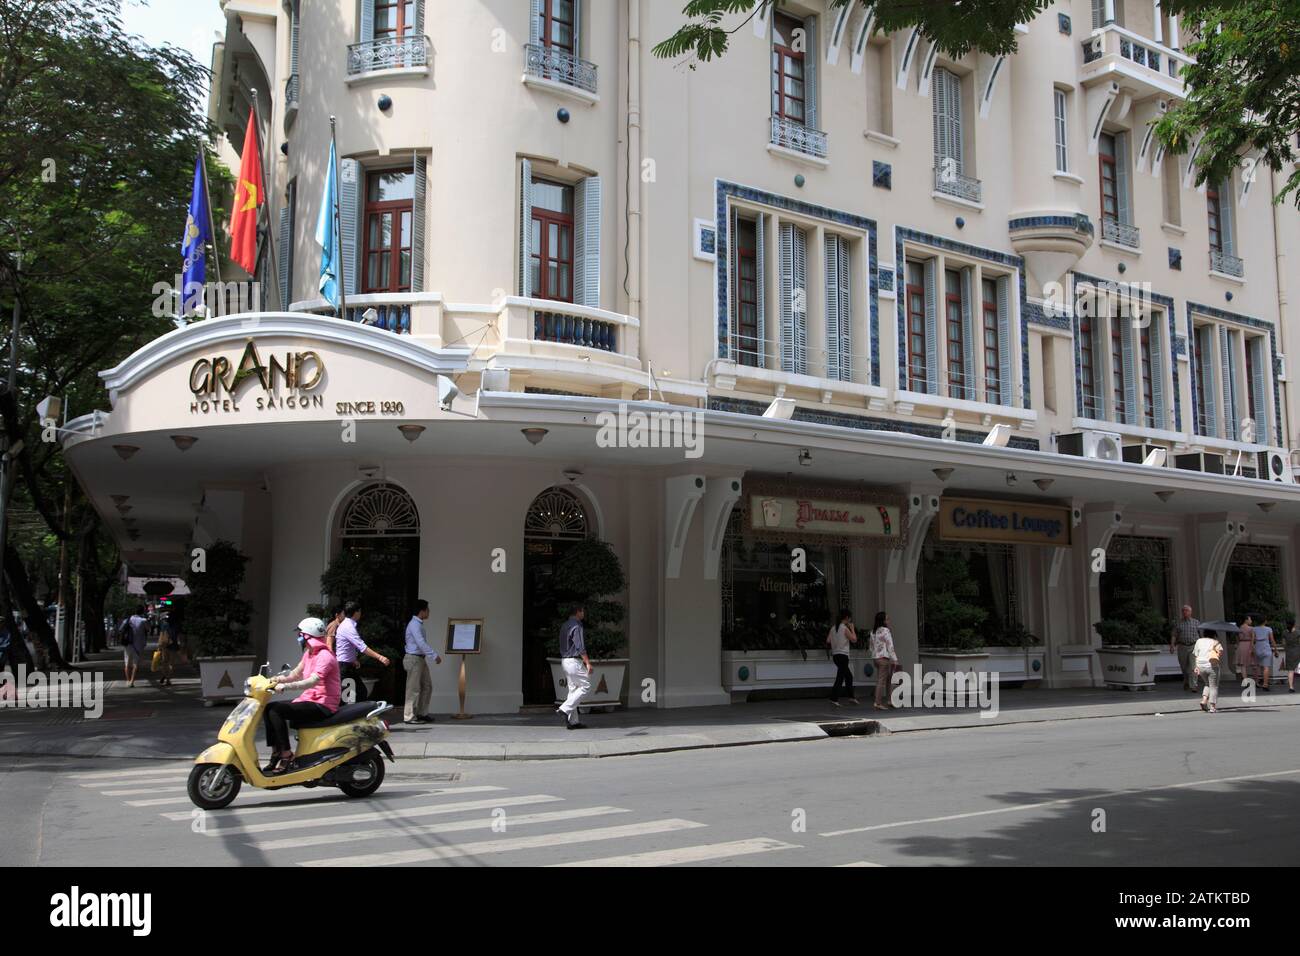 Grand Hotel Saigon, Historisches Hotel, Kolonialarchitektur, Dong Khoi Street, Ho-Chi-Minh-Stadt, Saigon, Vietnam, Asien Stockfoto